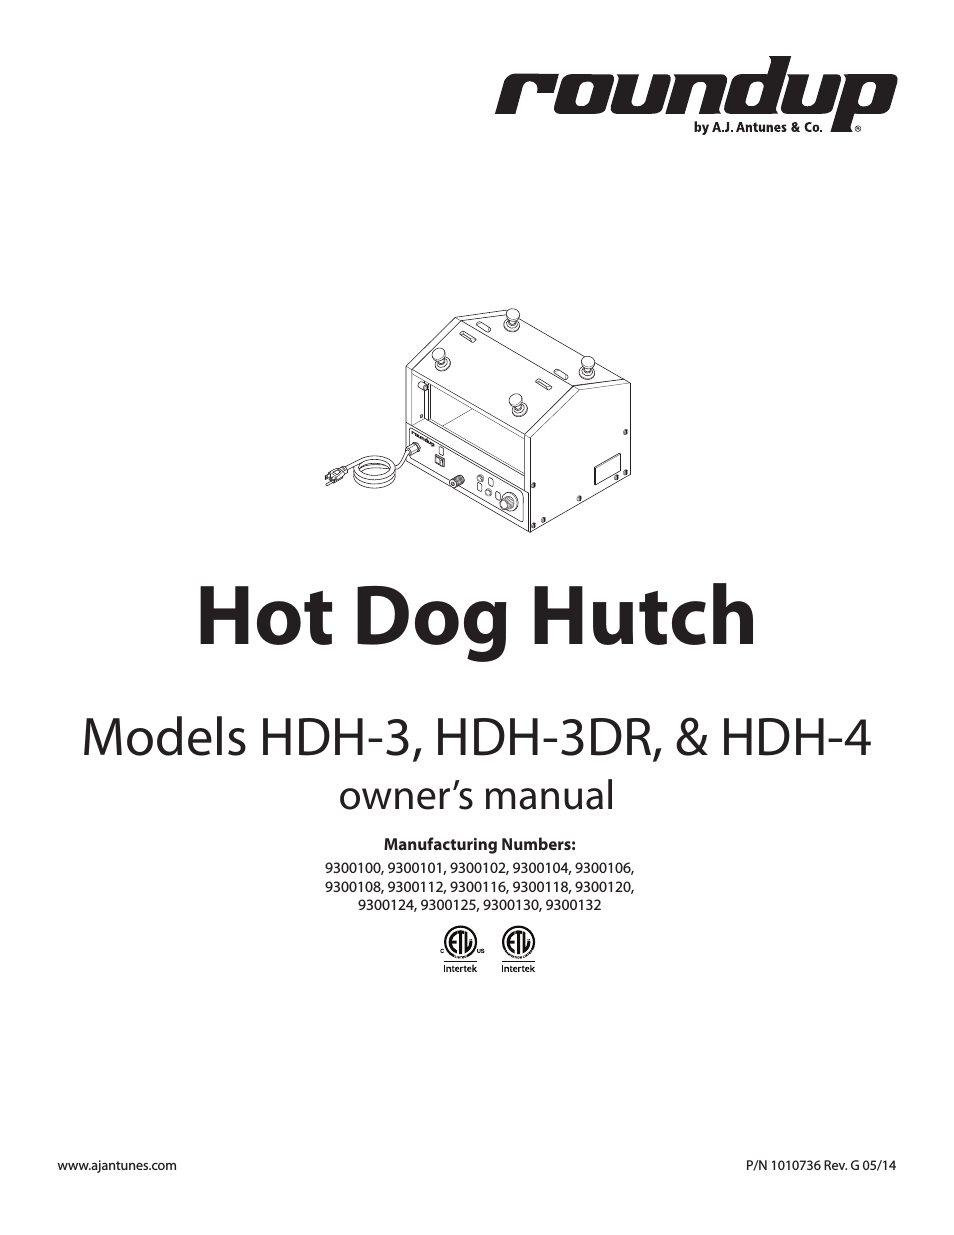 HDH-3DR 9300120